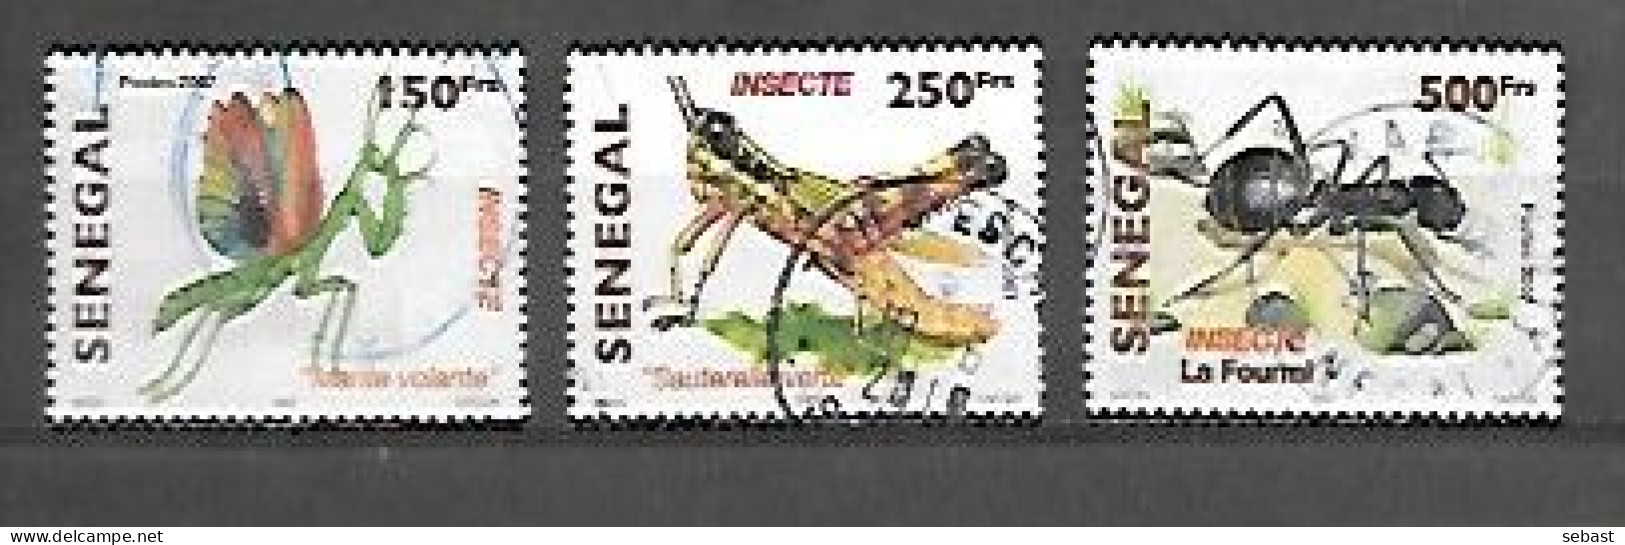 TIMBRE OBLITERE DU SENEGAL DE 2010 N° MICHEL 2162 2164/65 - Senegal (1960-...)